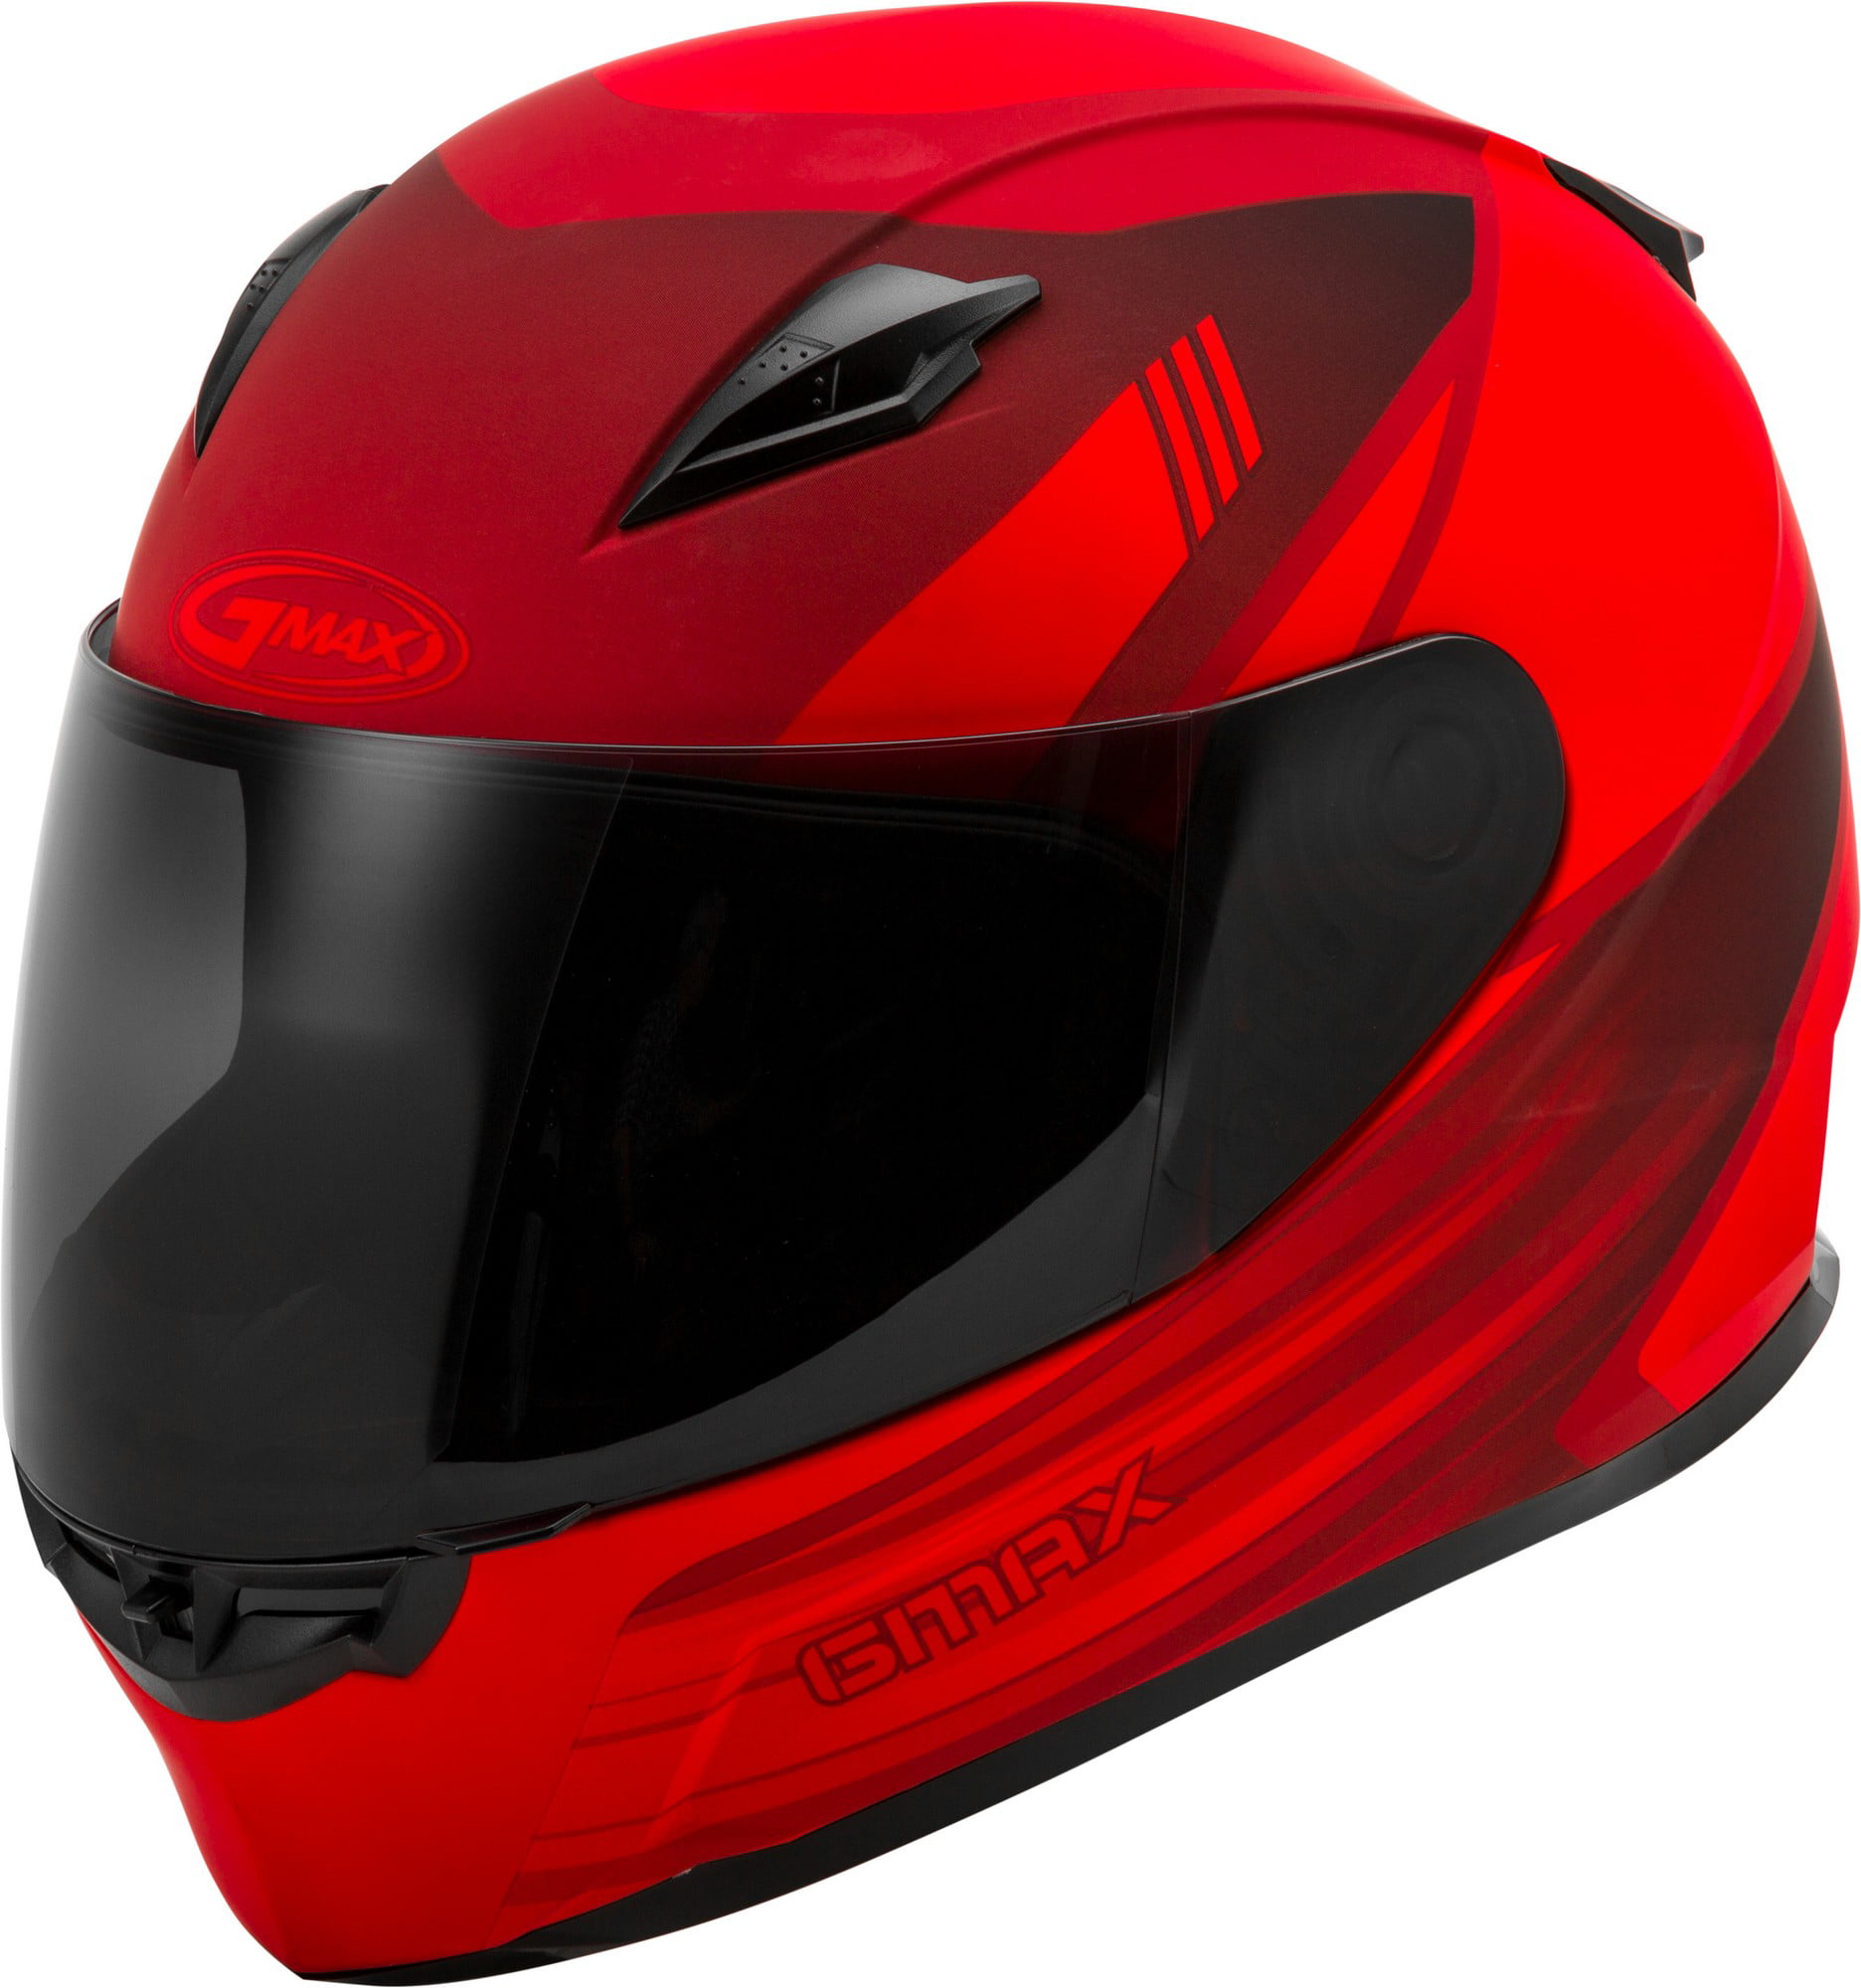 GMAX FF-49 Deflect Motorcycle Helmet Matte Red/Black - Walmart.com